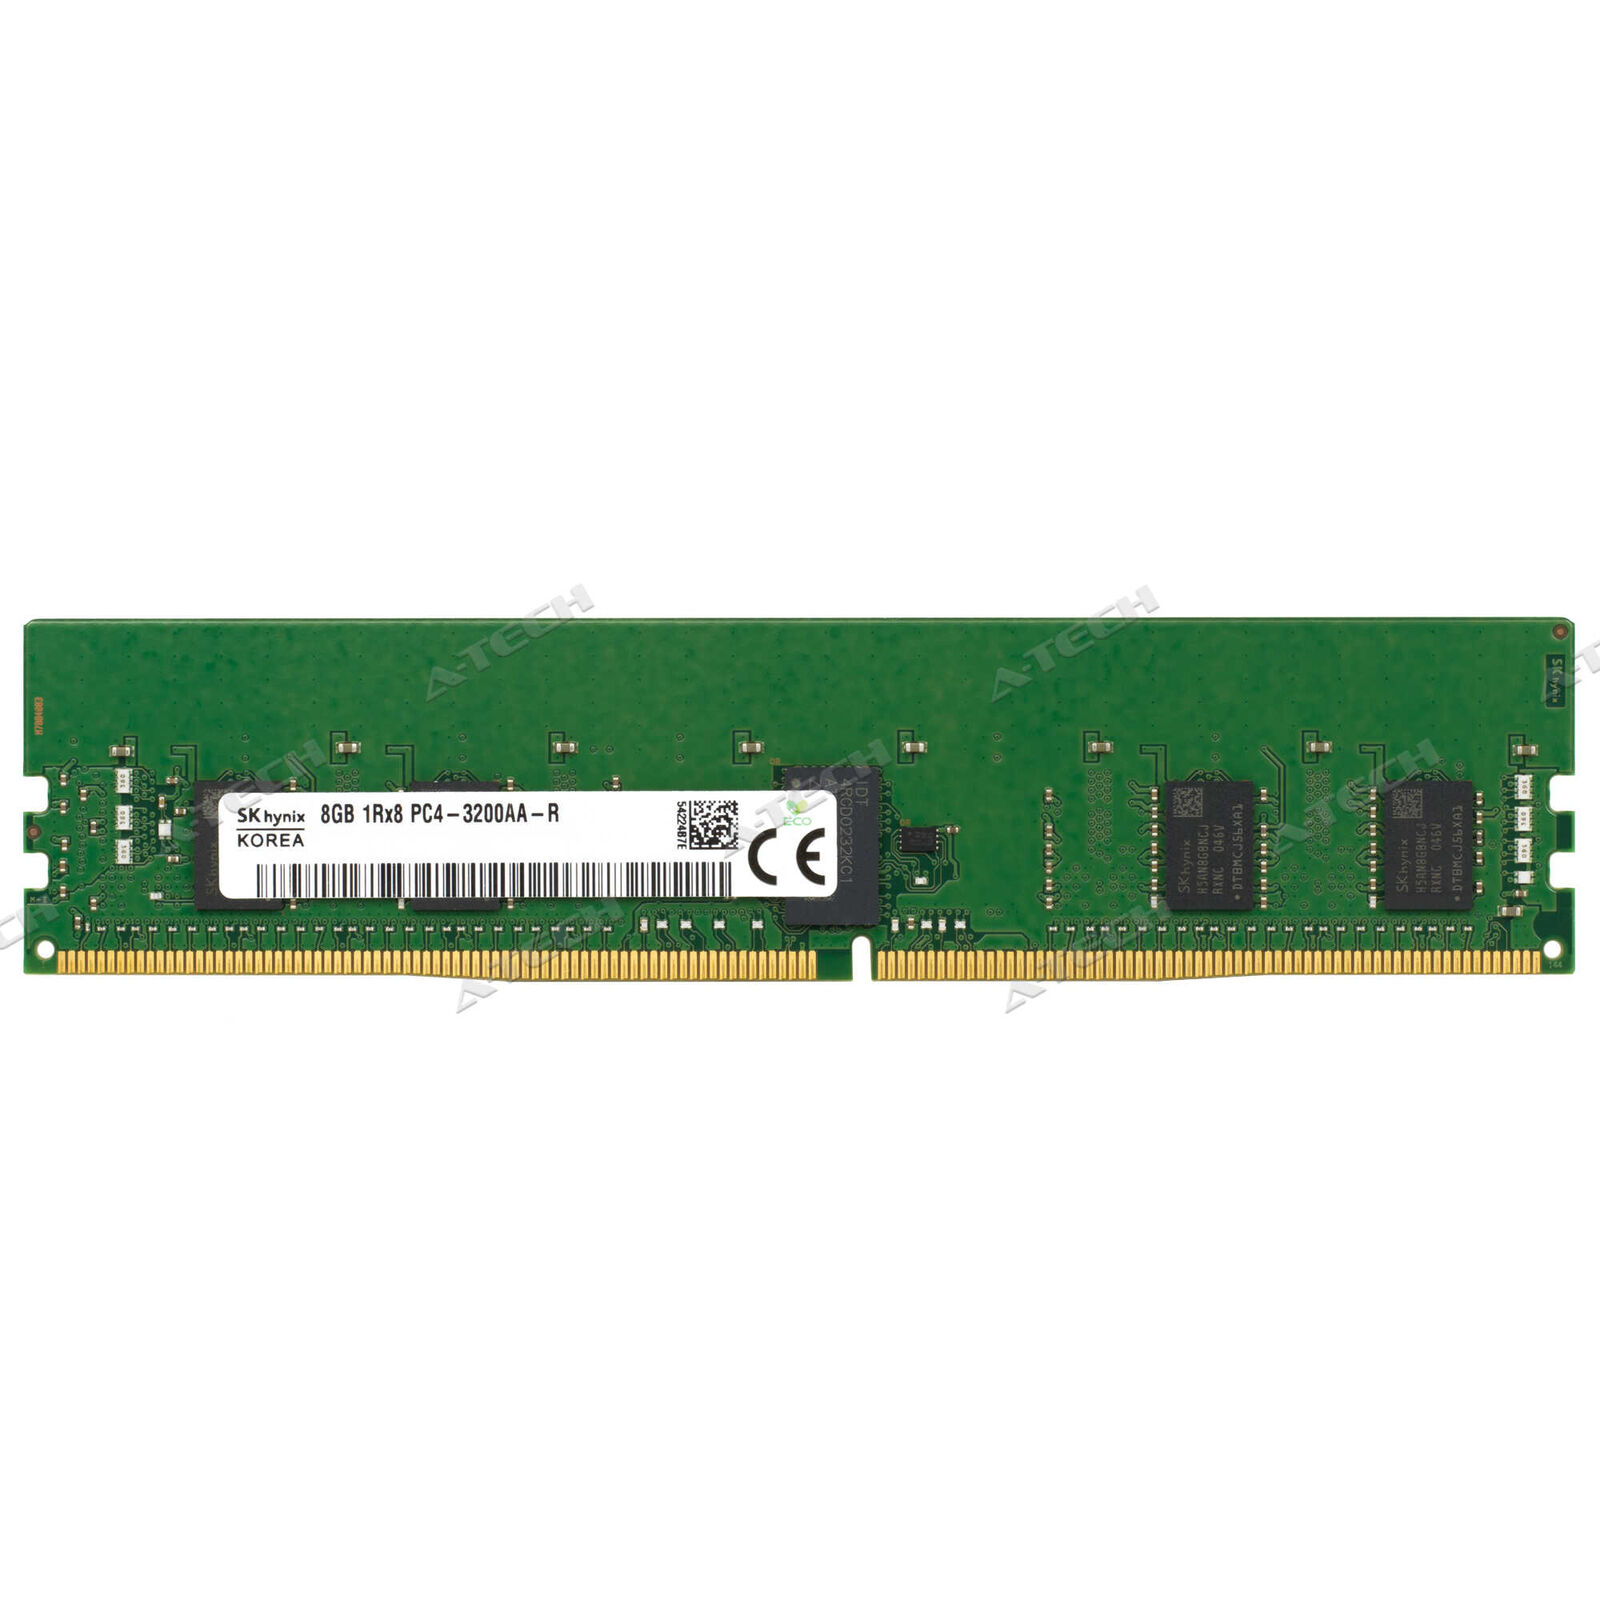 Hynix 8GB 1Rx8 PC4-3200 RDIMM DDR4-25600 ECC REG Registered Server Memory RAM 1x